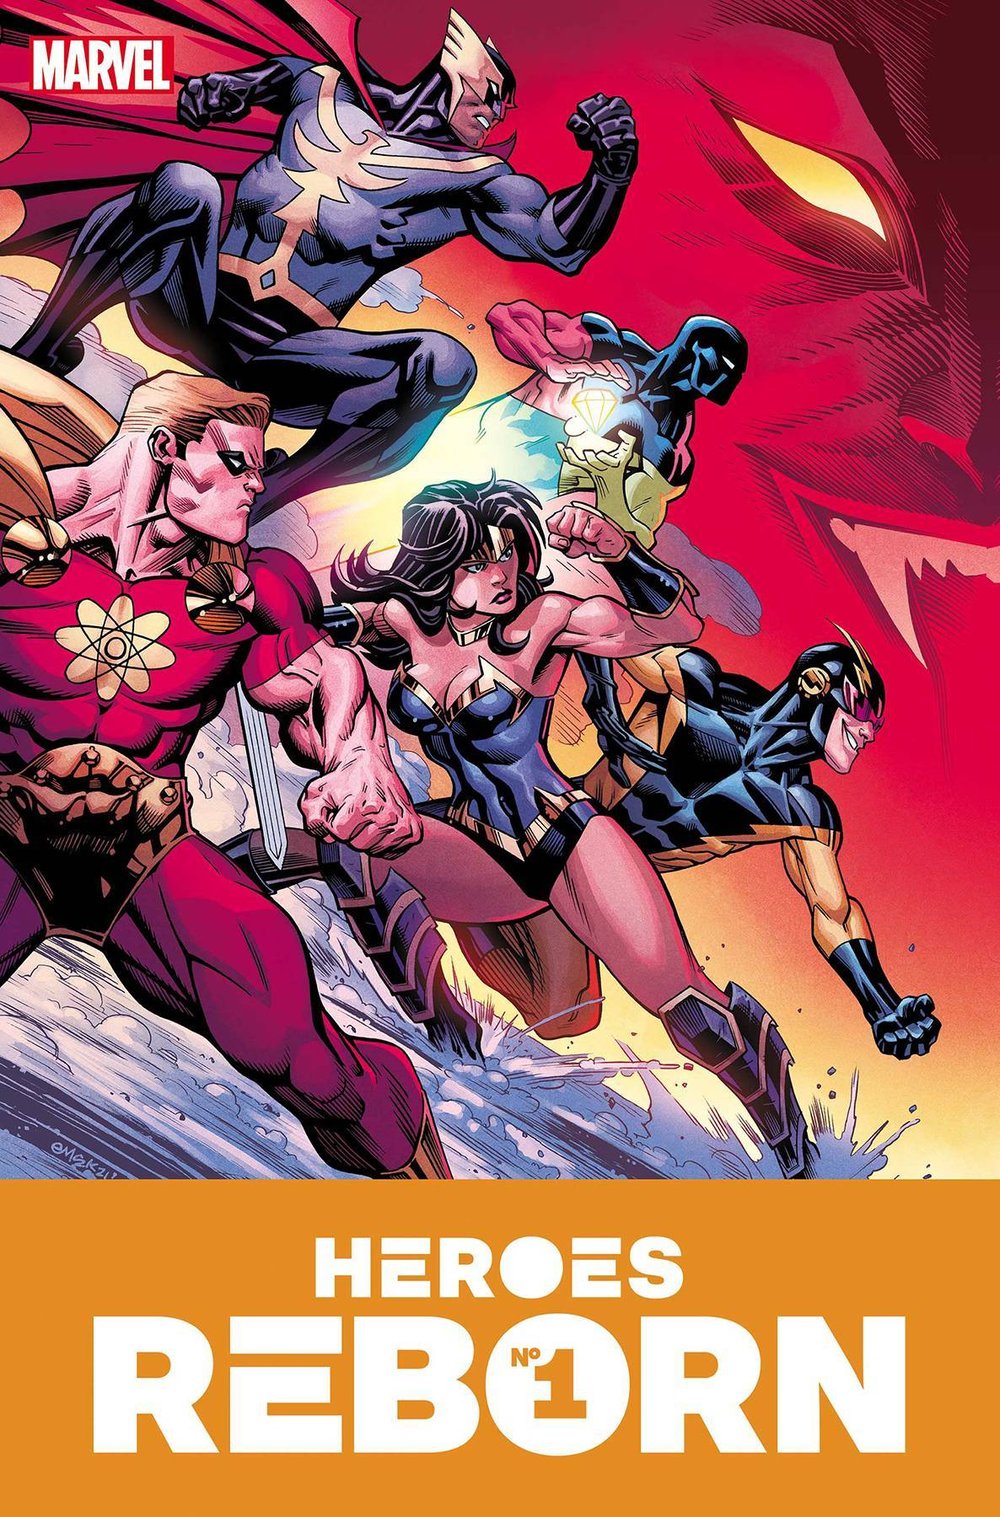 Heroes Reborn #1 Variant Cover